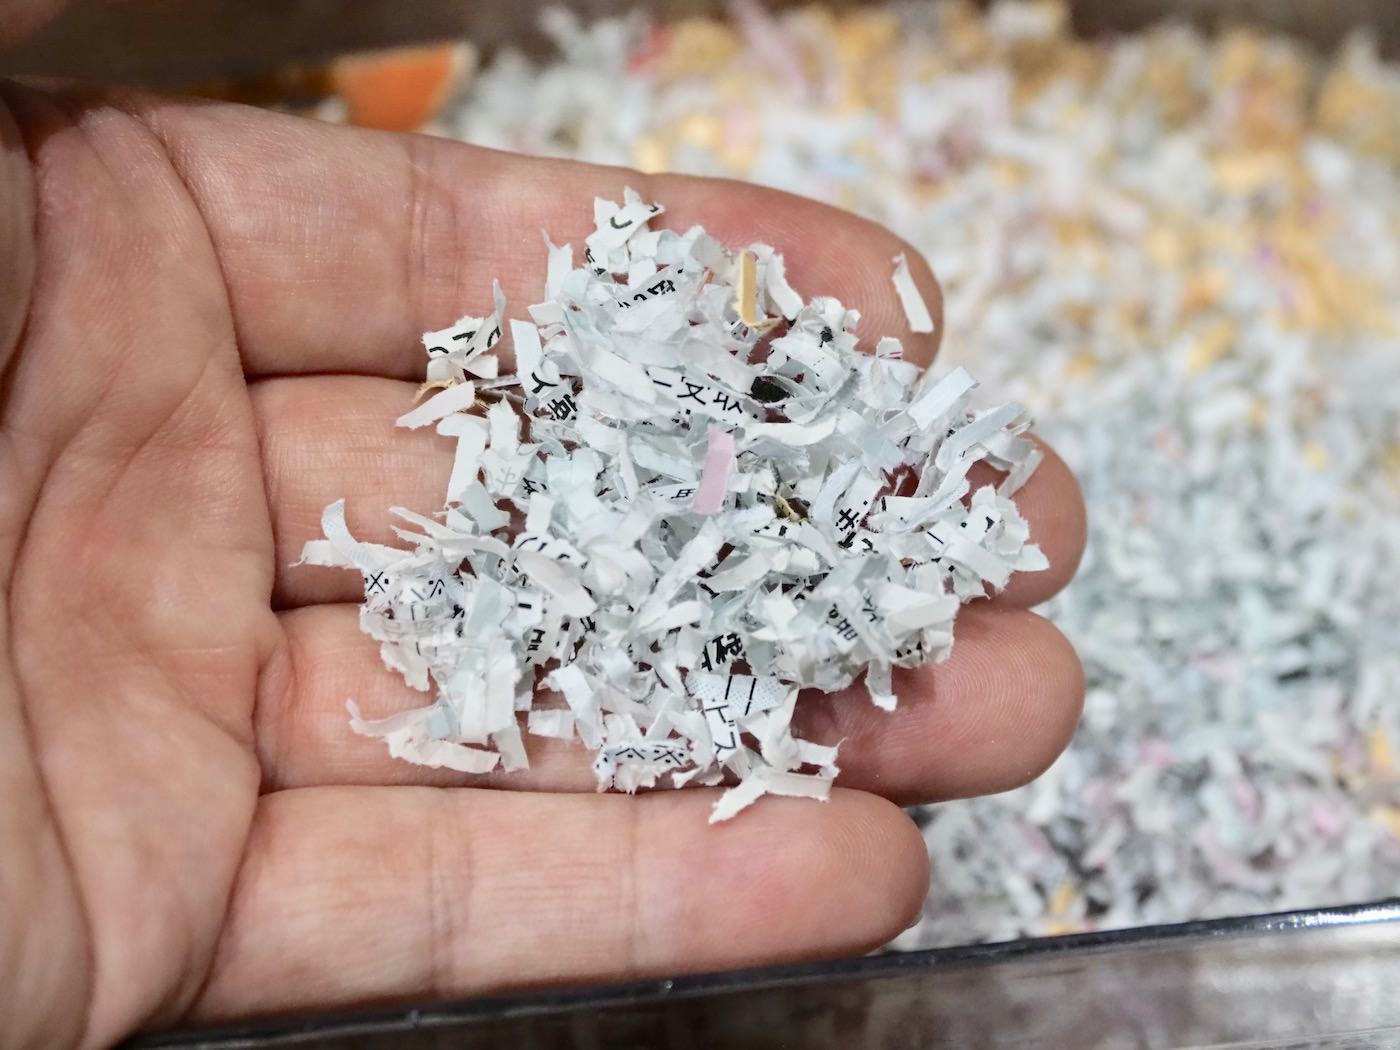 household-shredders-are-surprisingly-good-00006